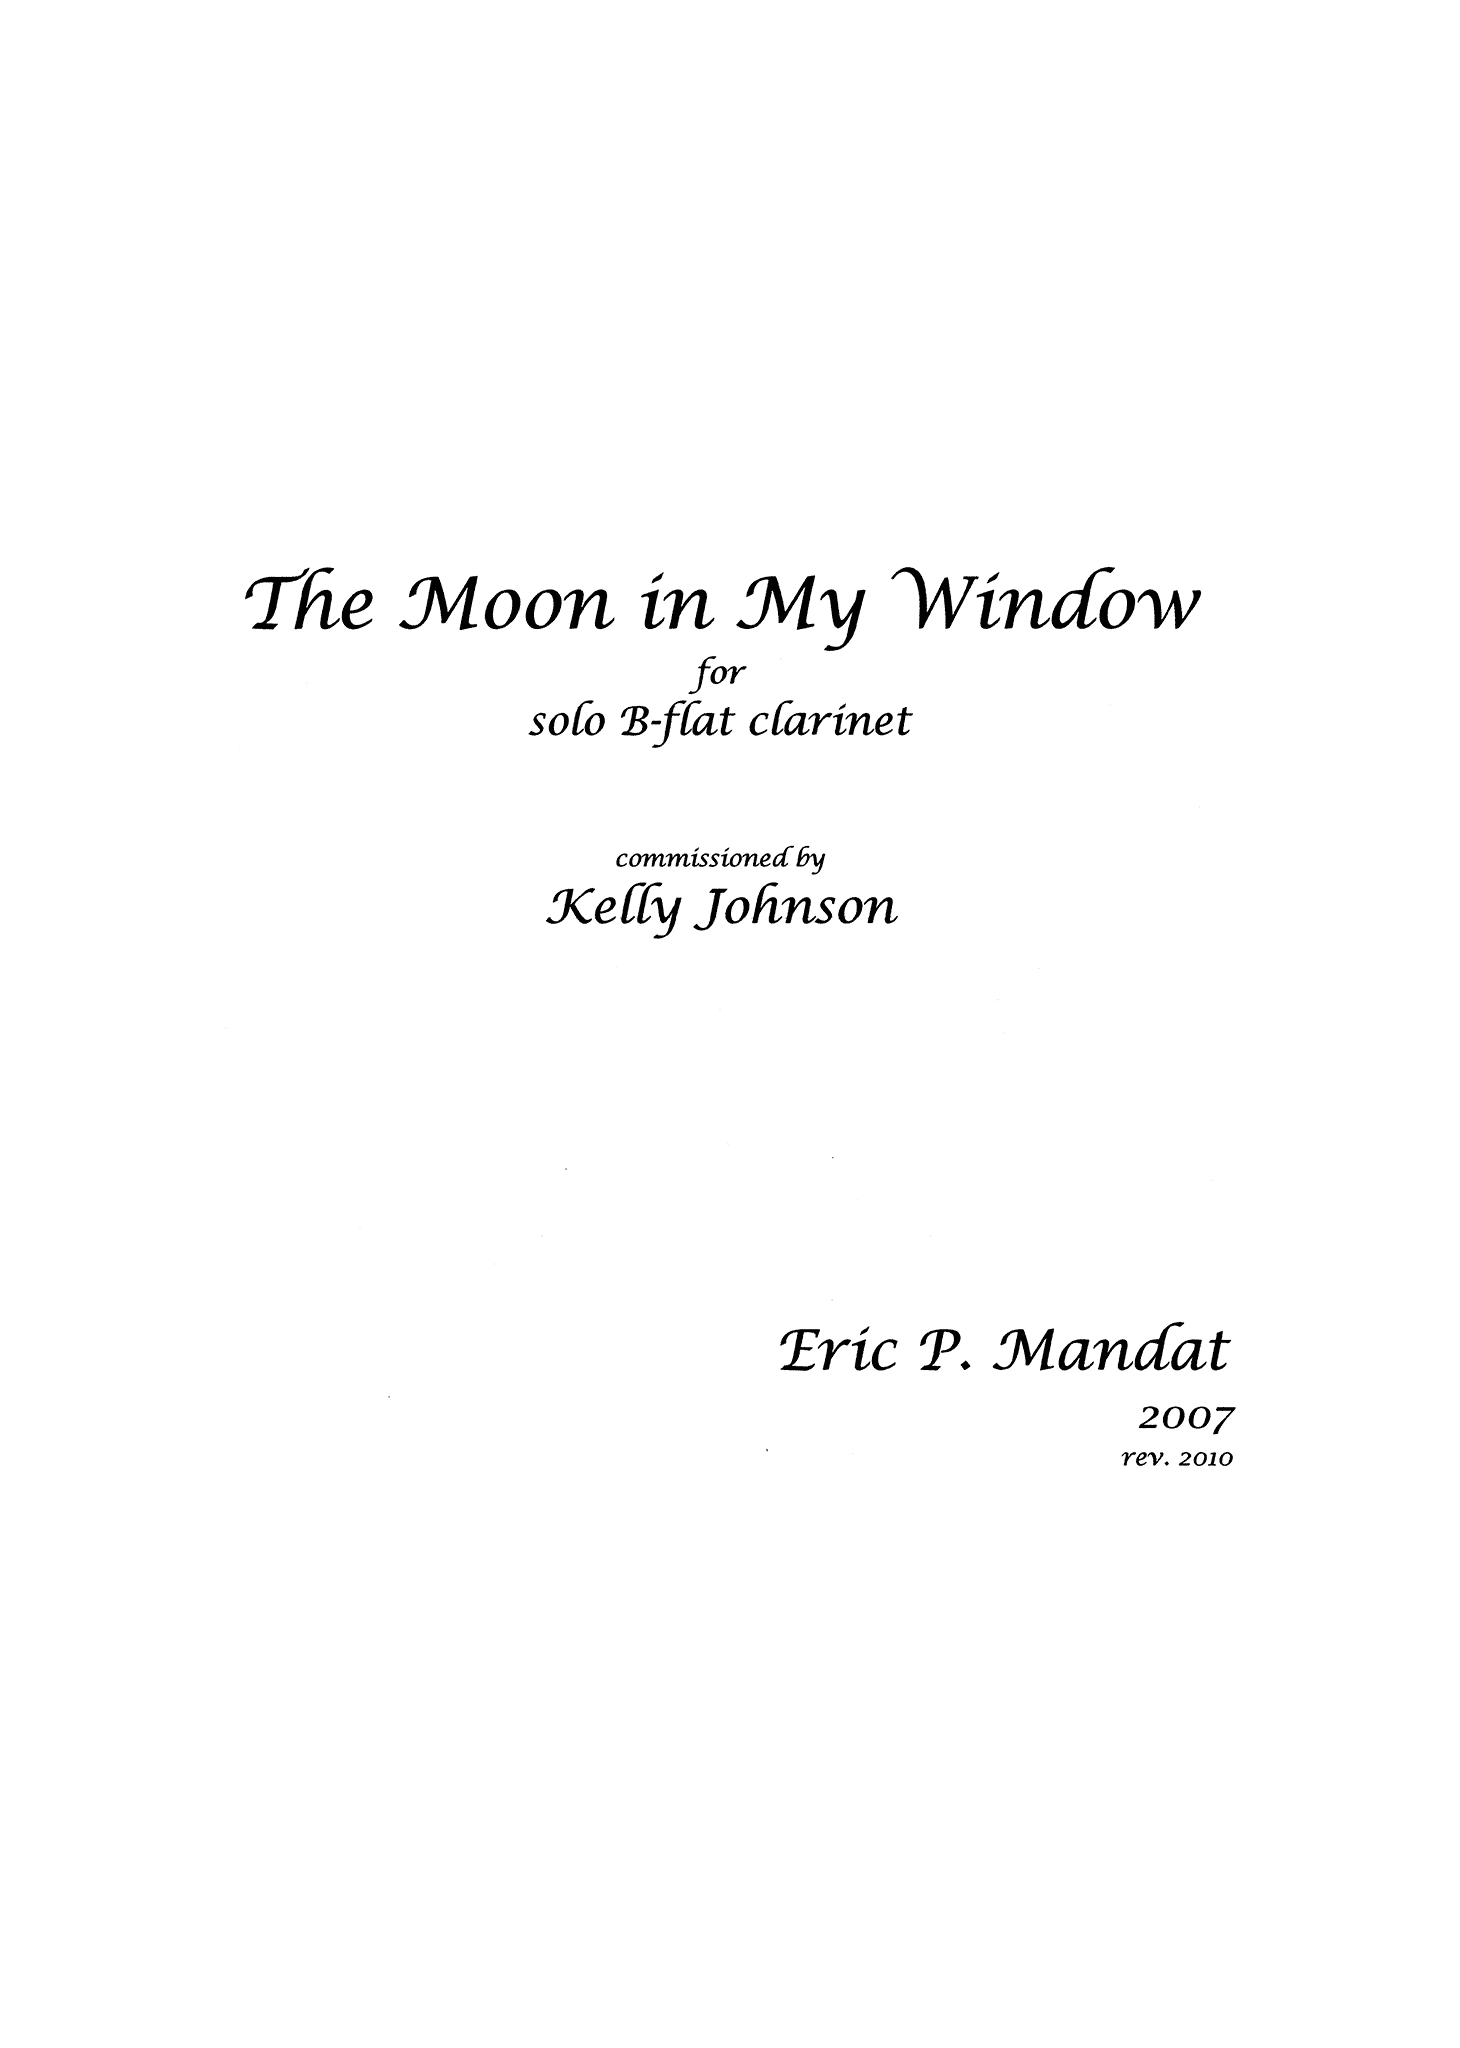 Eric Mandat The Moon in My Window unaccompanied clarinet cover